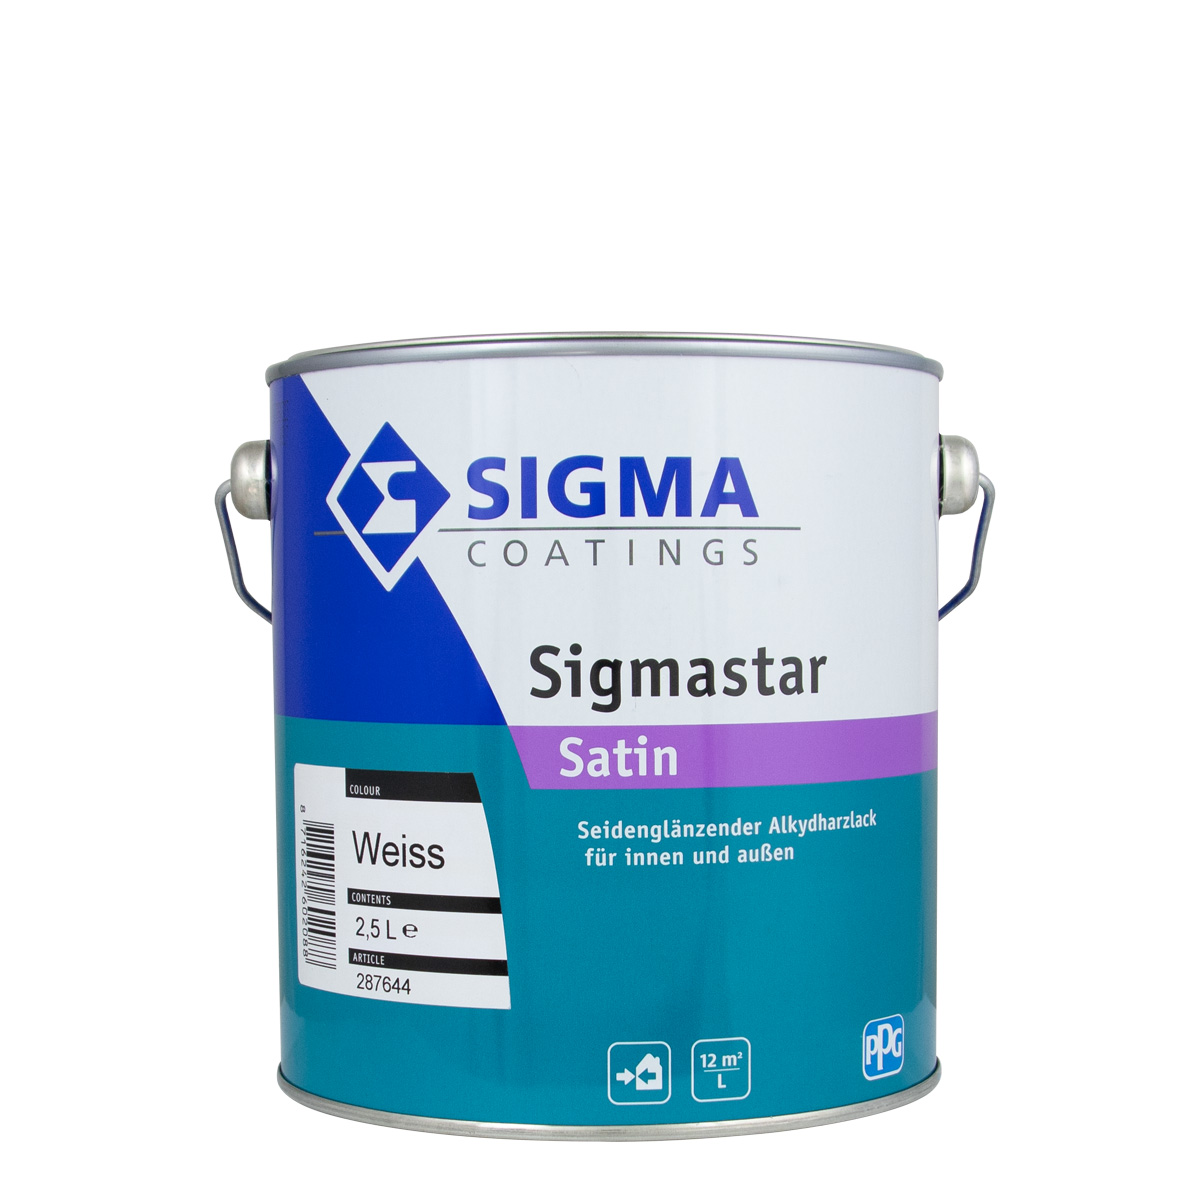 Sigma_Sigmastar_Satin_2,5l_gross